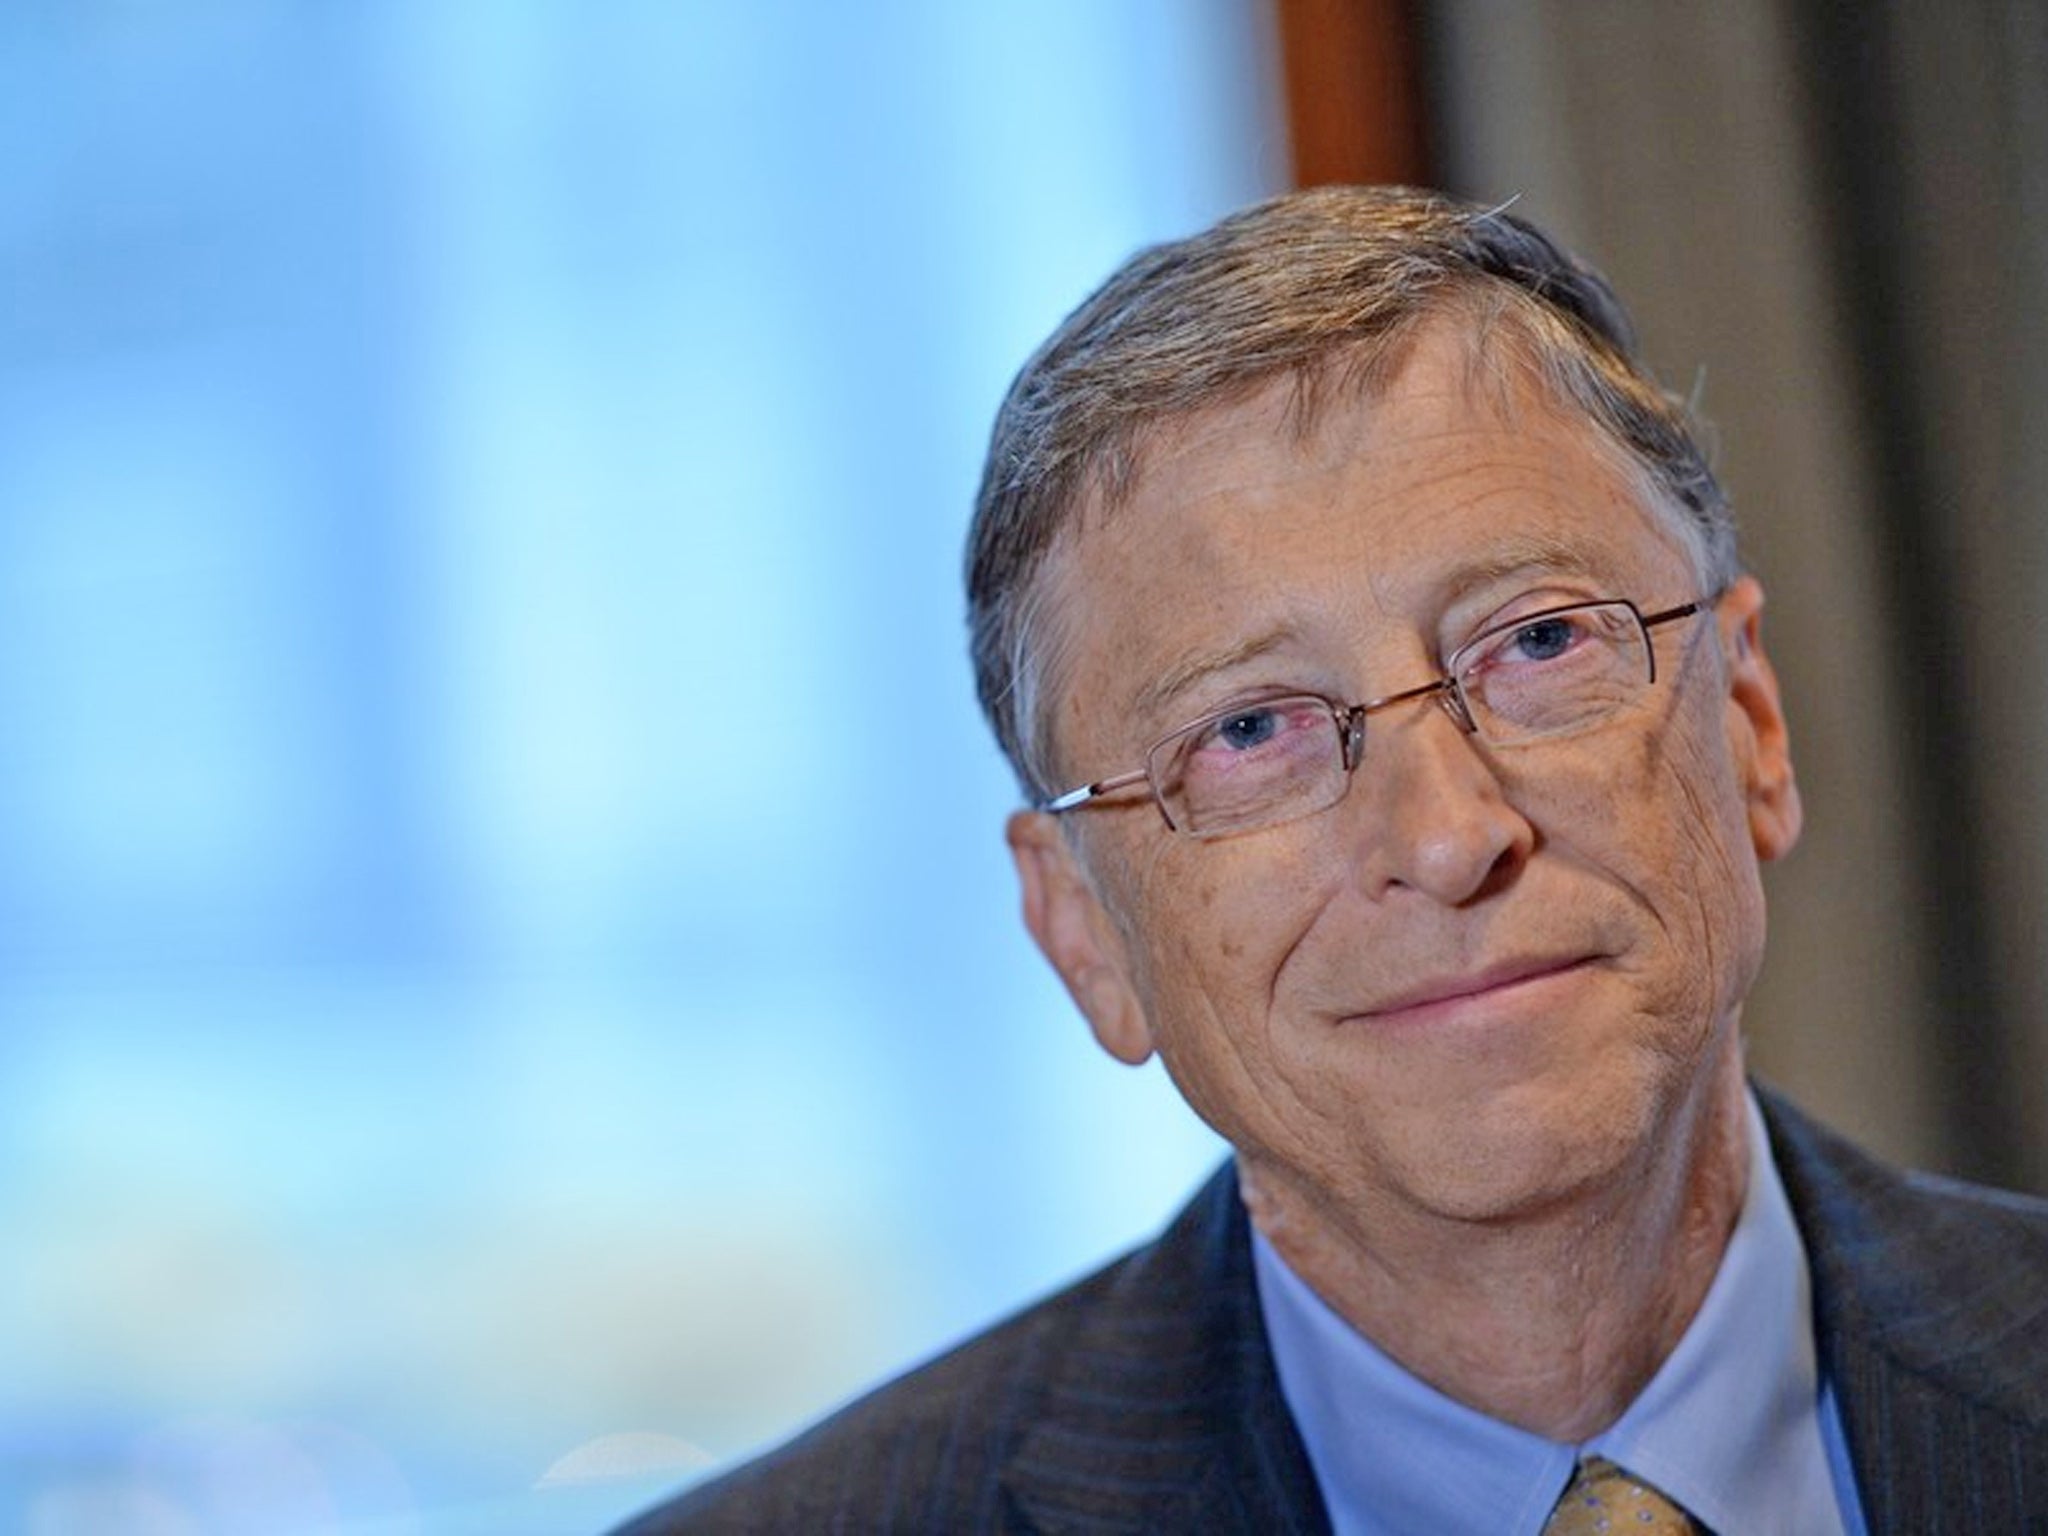 Bill Gates and Warren Buffett created the giving pledge